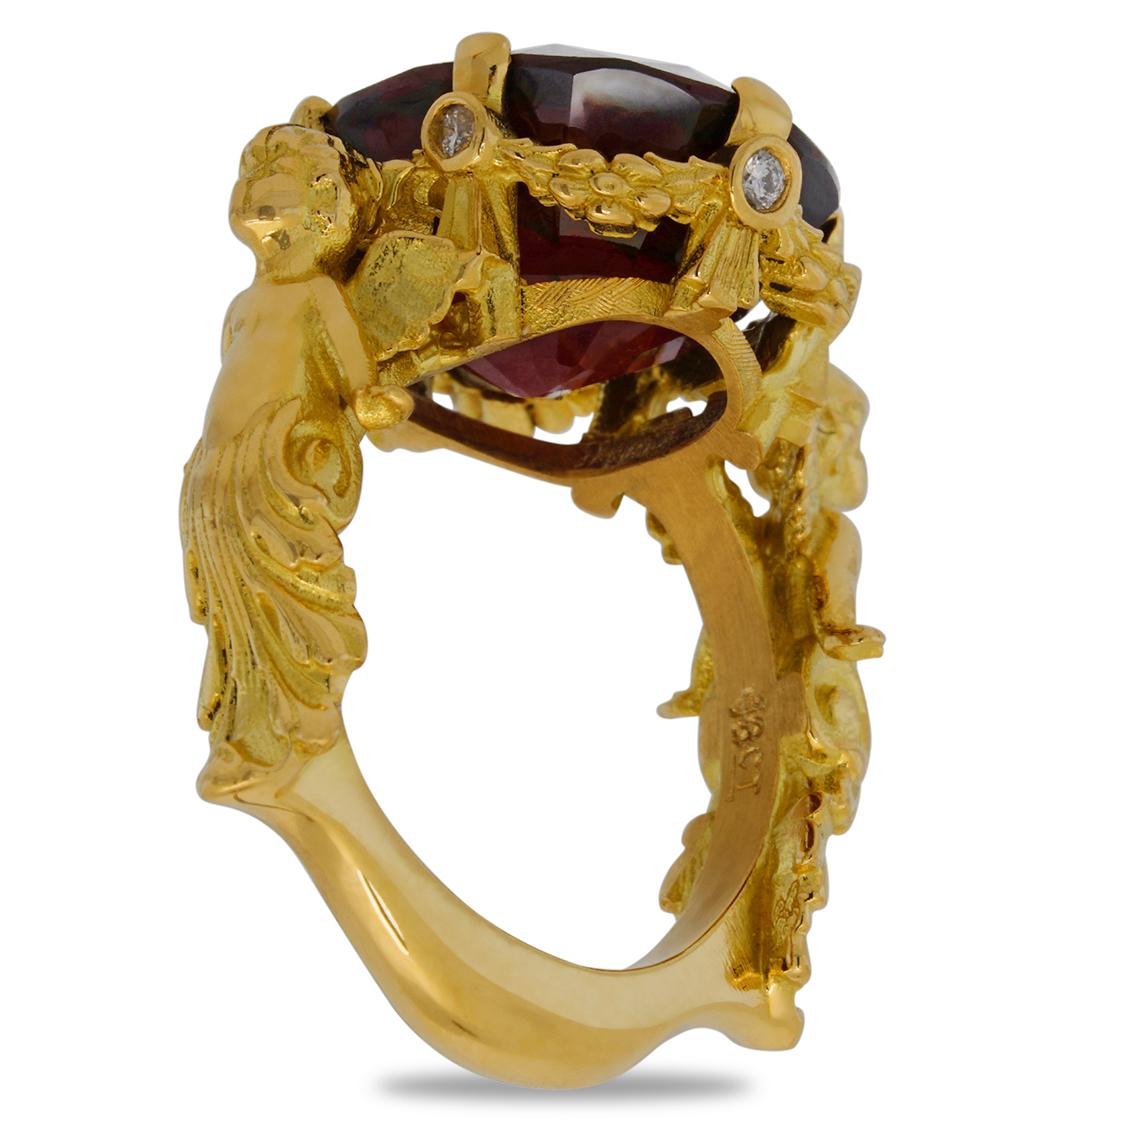 Women's or Men's Amorini Ring in 18 Karat Yellow Gold with Garnet and White Diamonds